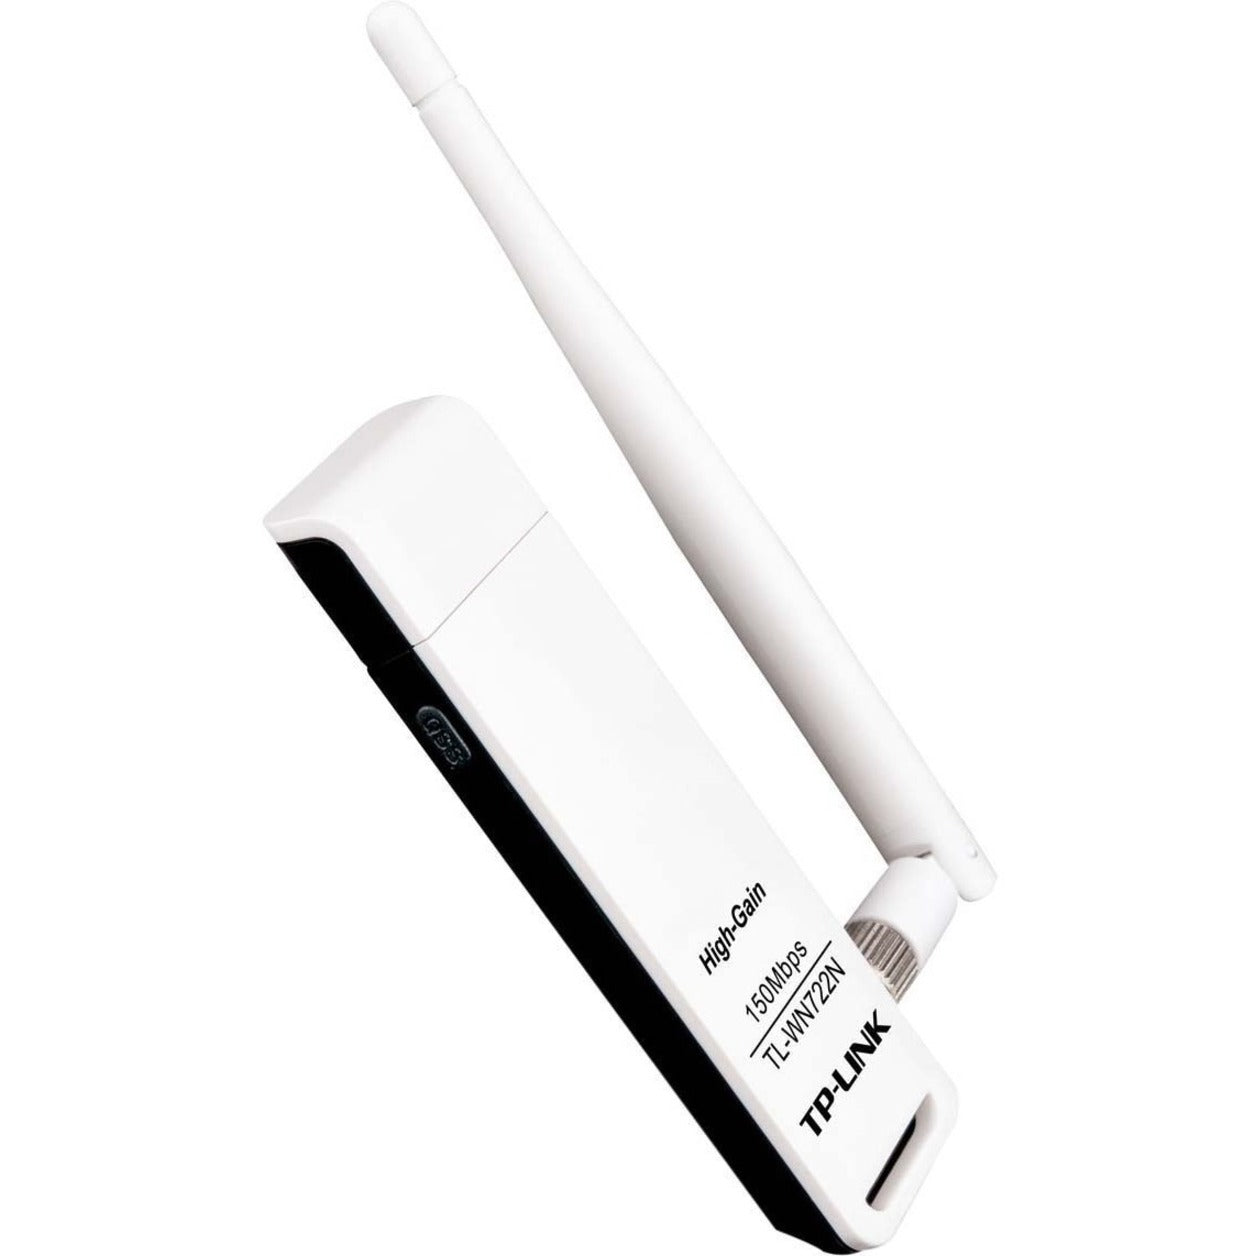 TP-Link TL-WN722N 150Mbps High Gain Wireless USB Adapter, Wi-Fi 4, Omnidirectional Antenna, IEEE 802.11n, 4 dBi Antenna Gain